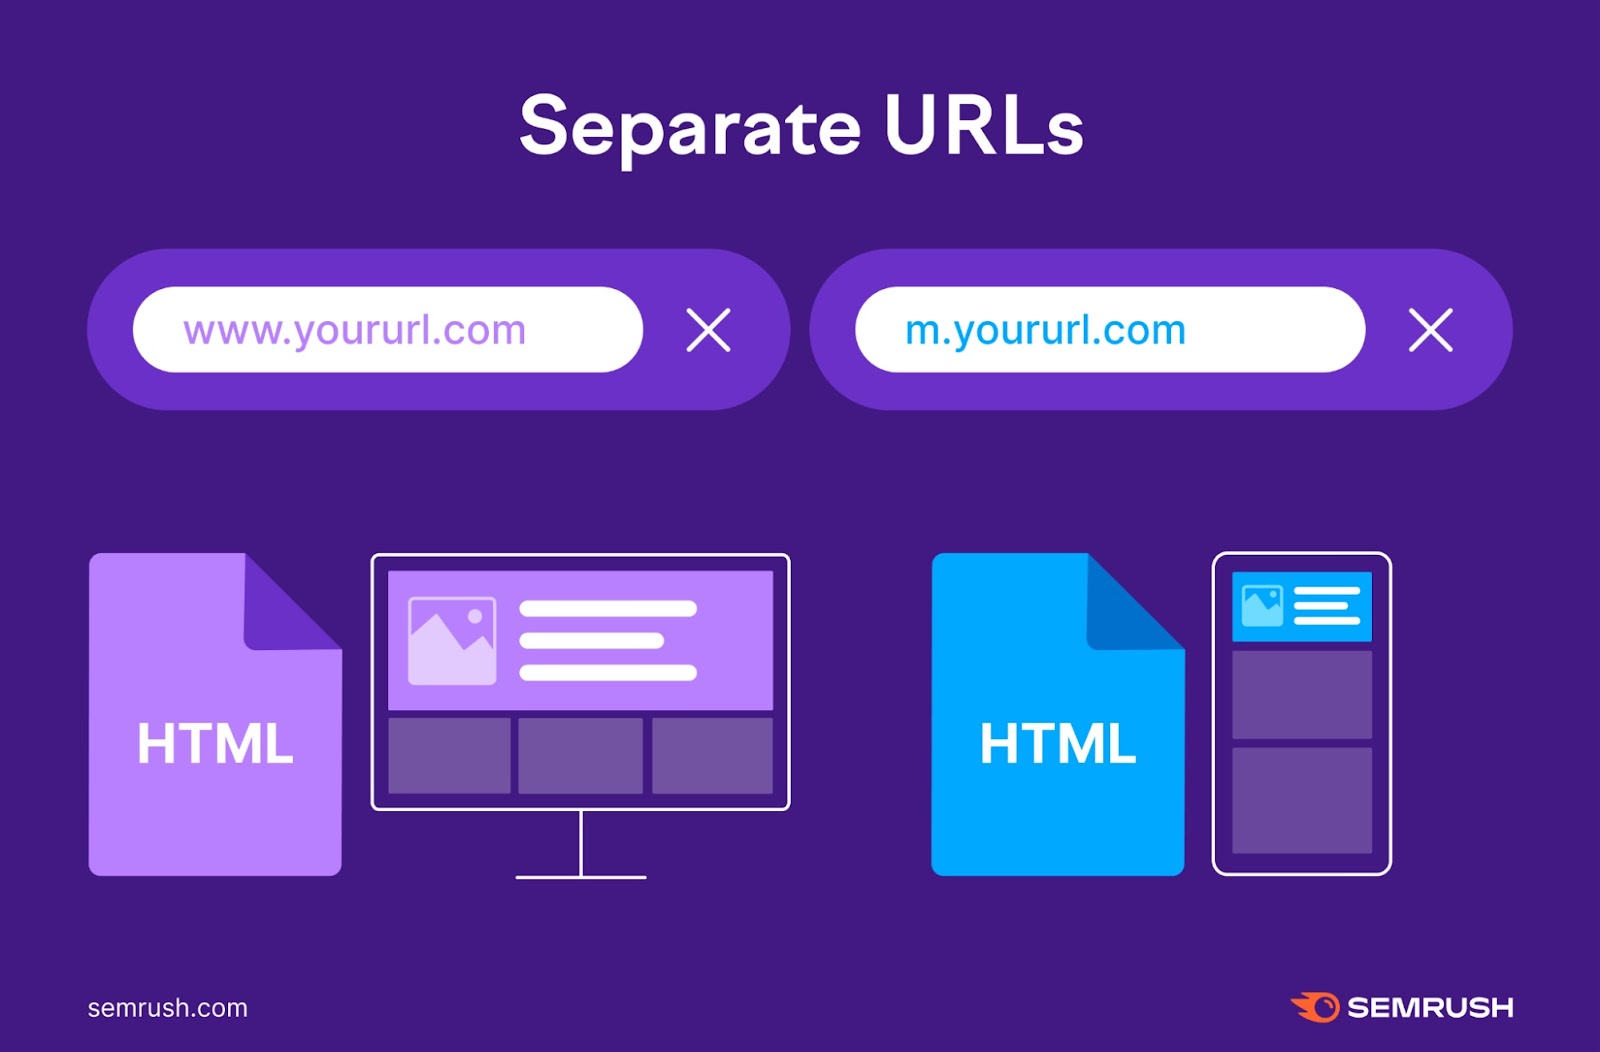 Separate URLs on mobile and desktop screens